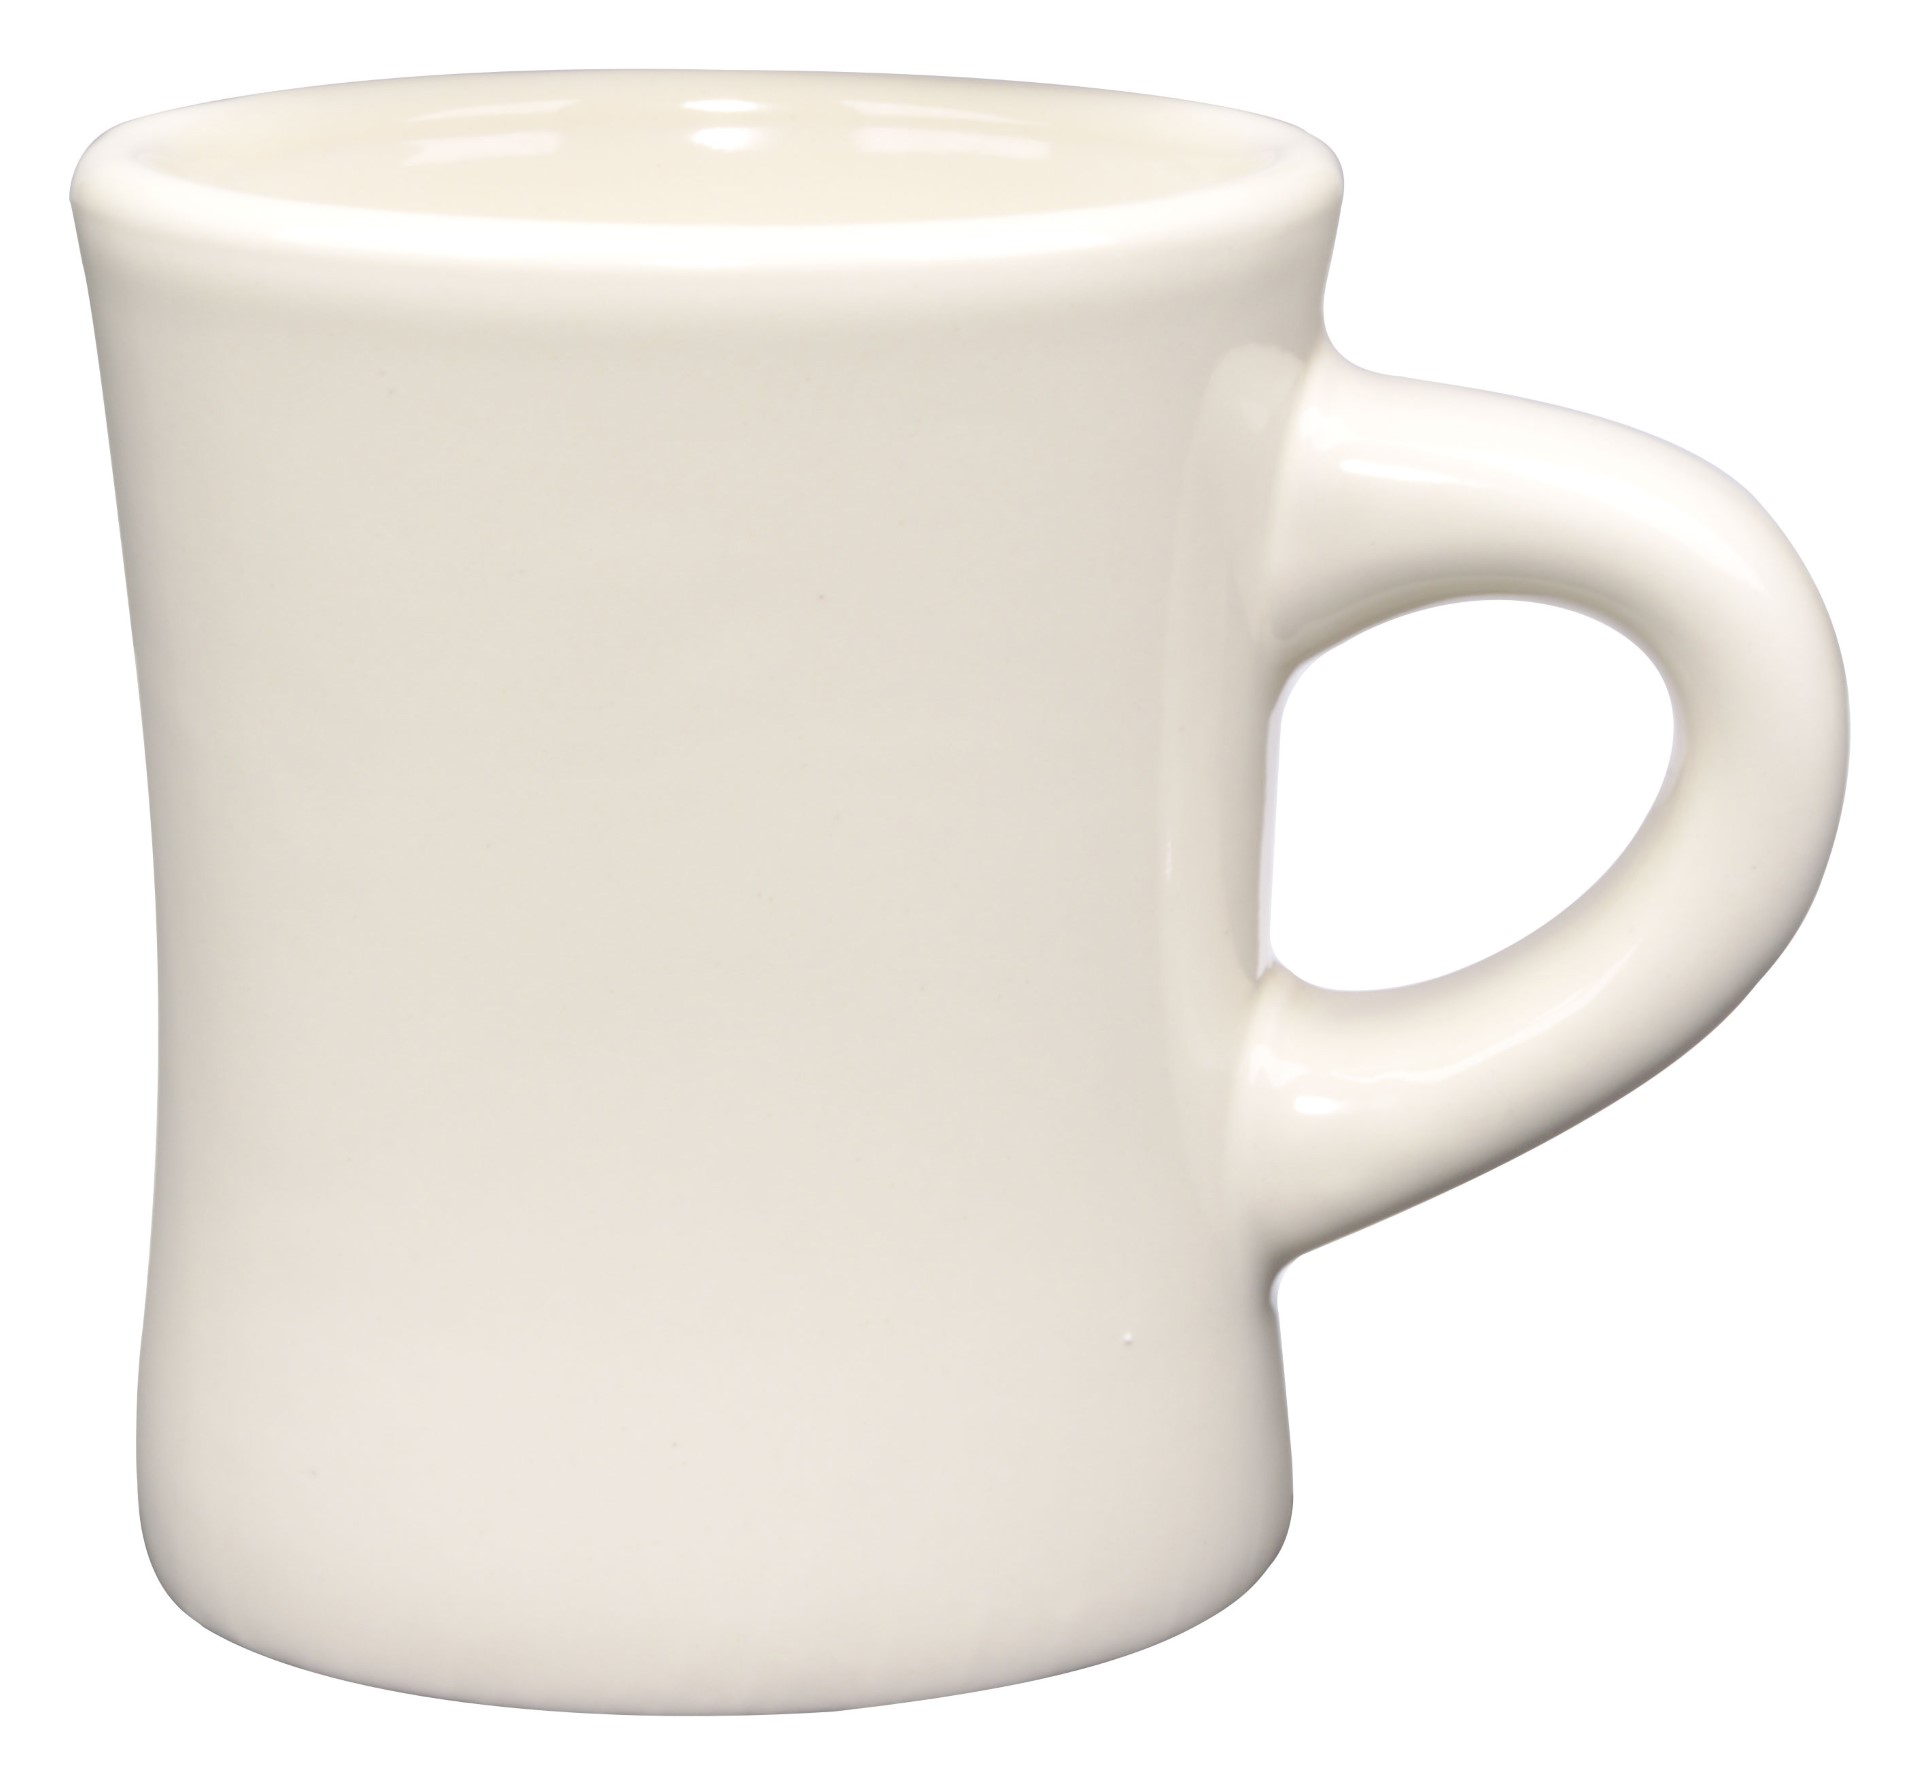 10 oz. Diner Mug - Glossy